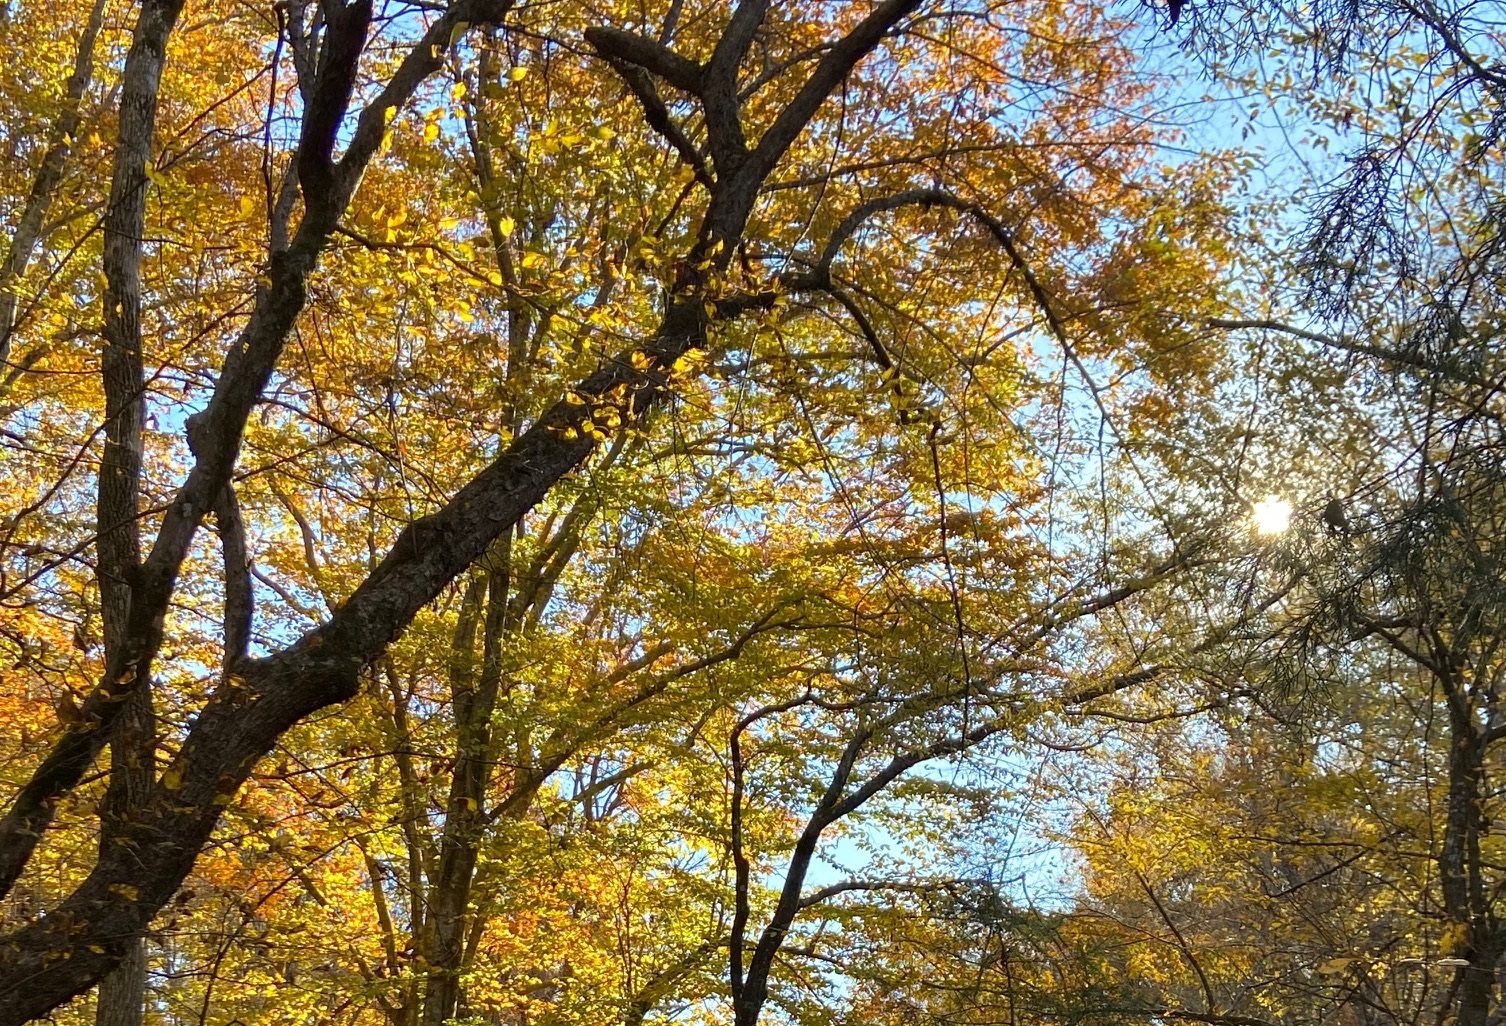 Yellow fall foliage on large trees